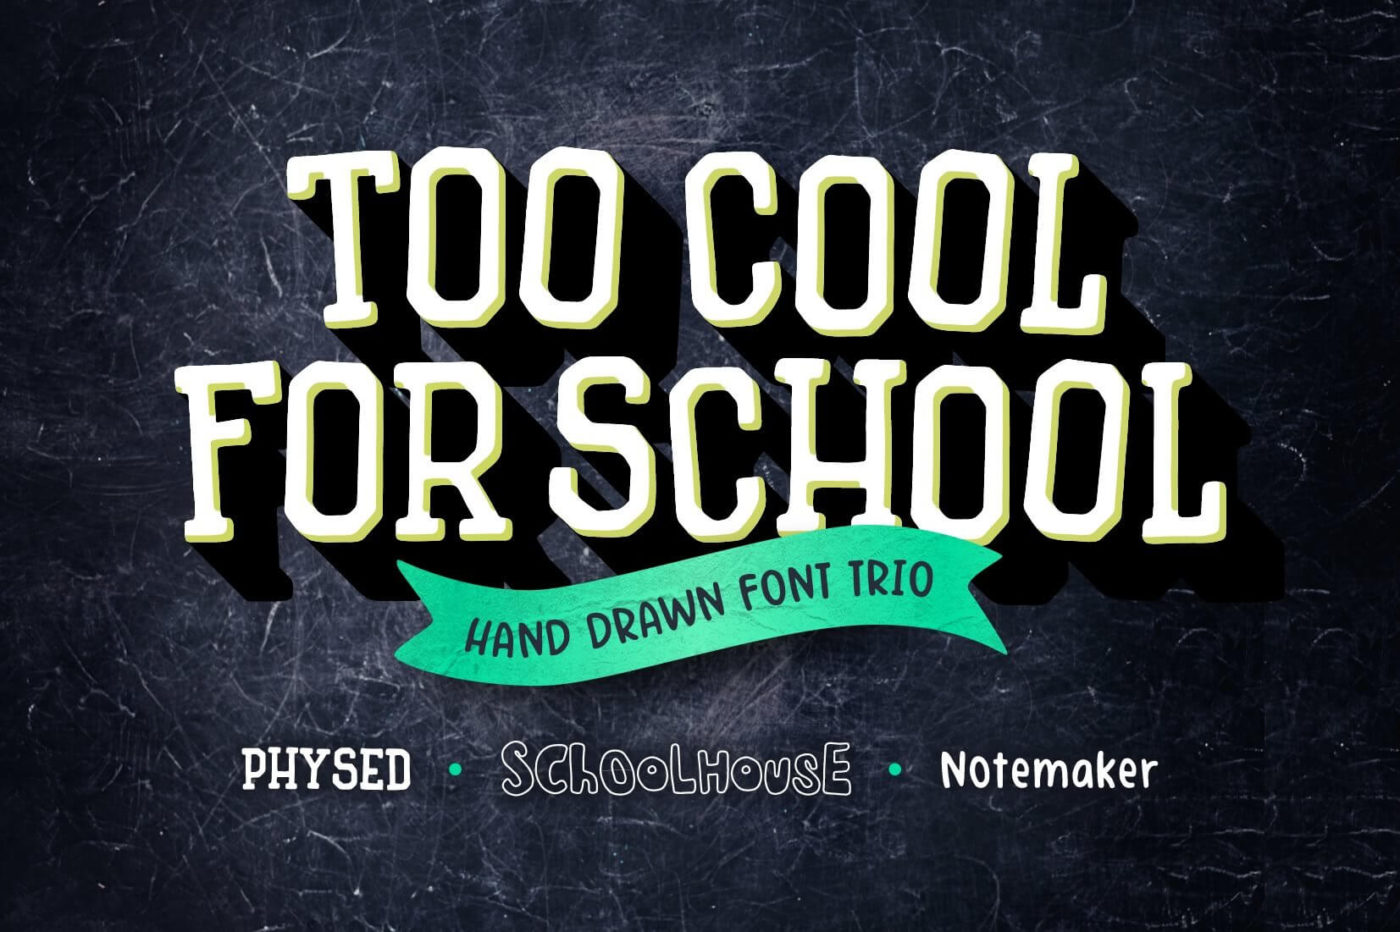 Too Cool for School Font
--
25 Typefaces for Cool Kids • Little Gold Pixel • #schoolfonts #schooltype #schooltypefaces #typography #fonts